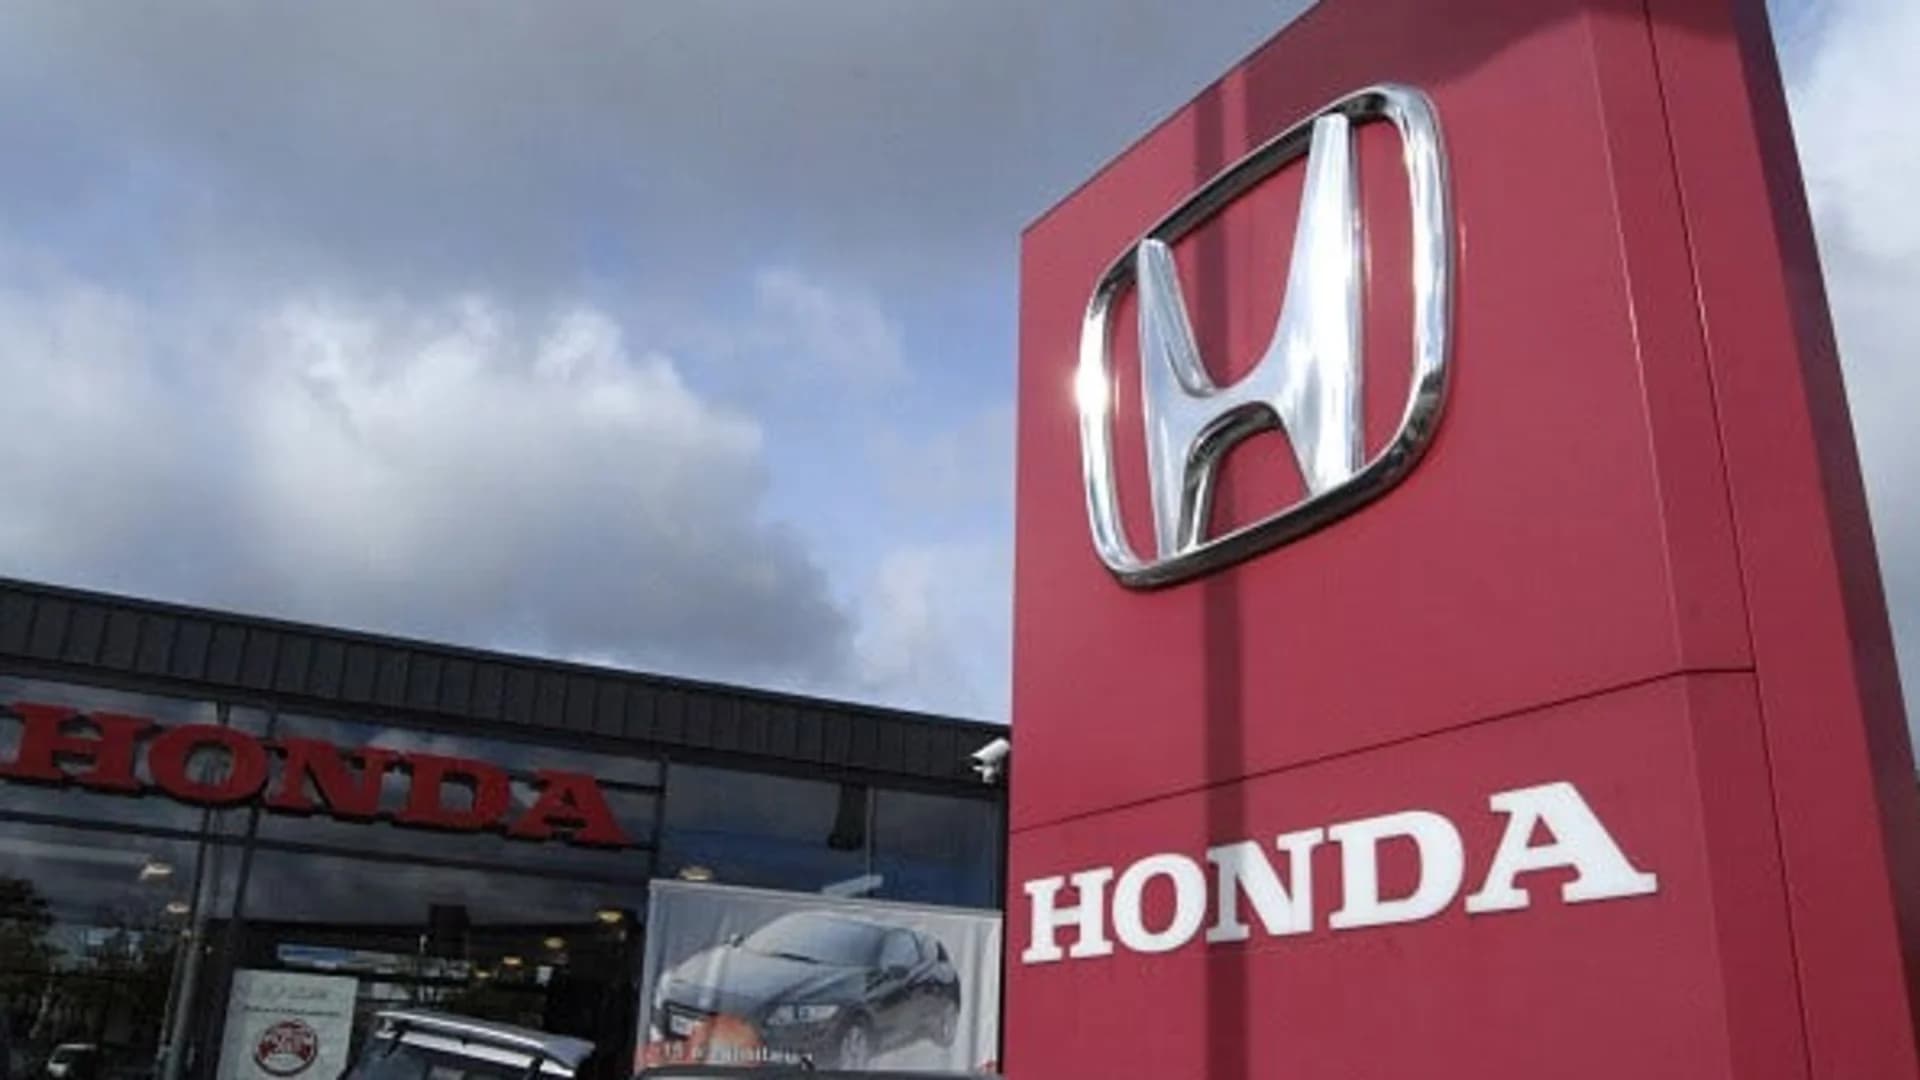 122,000 Honda minivans recalled after sliding doors can open unexpectedly